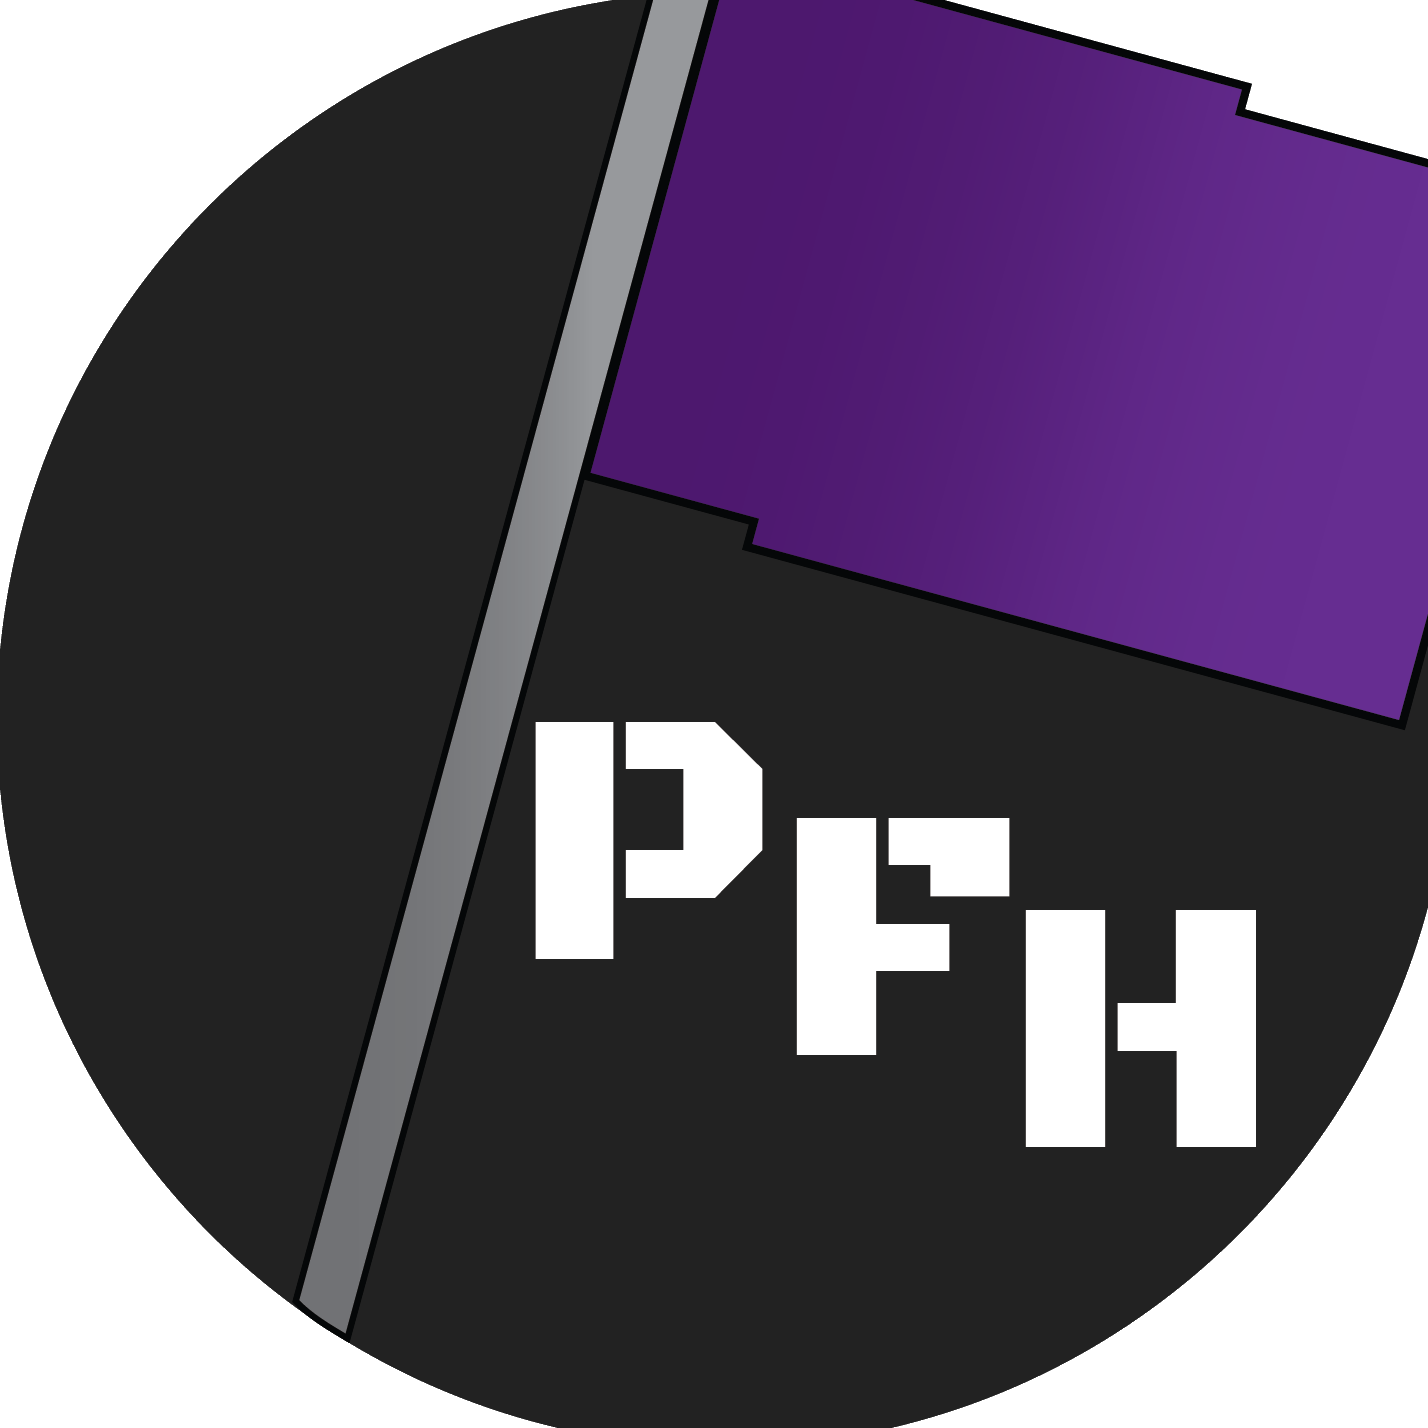 Purple Flag Logo